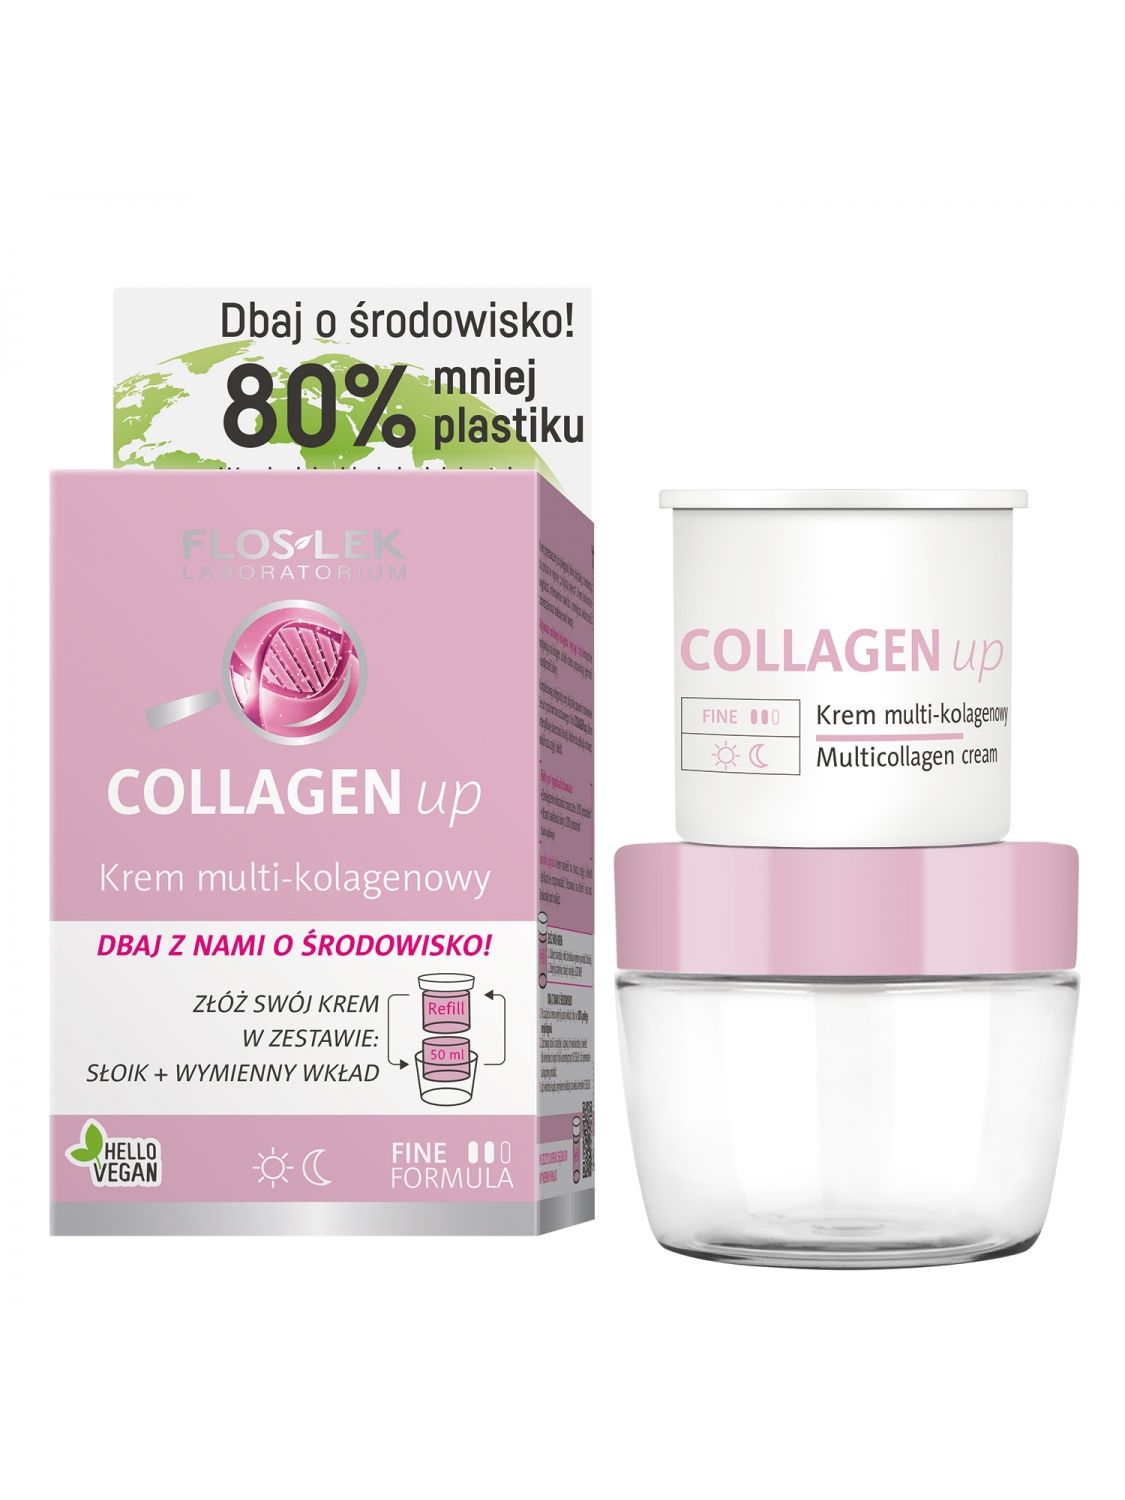 COLLAGEN UP® Multicollagen cream [ECO set] - 50 ml - Floslek